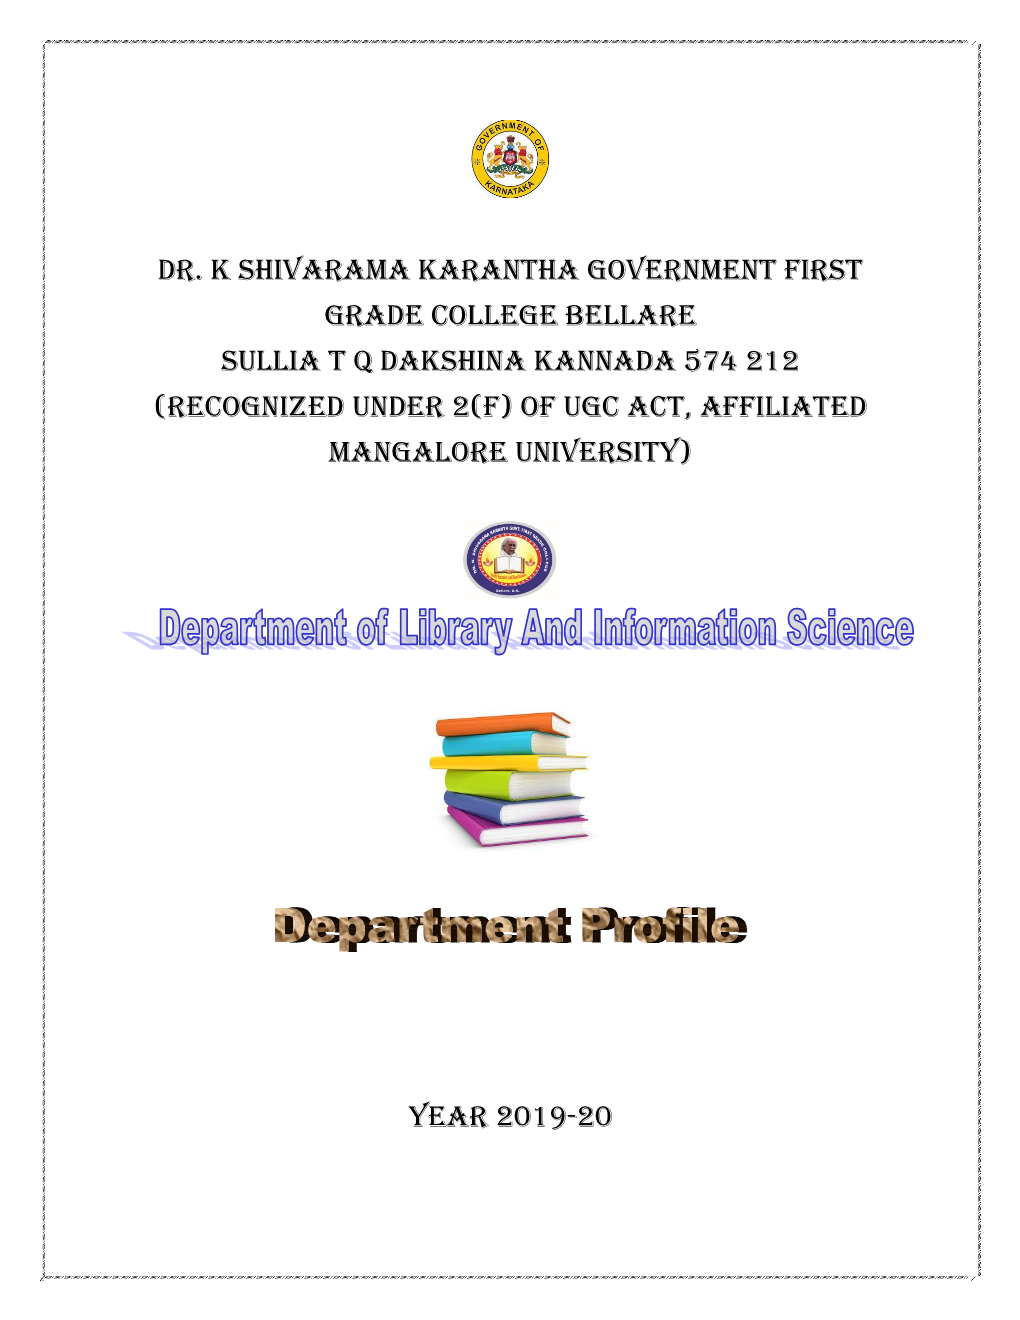 Dr. K Shivarama Karantha Government First Grade College